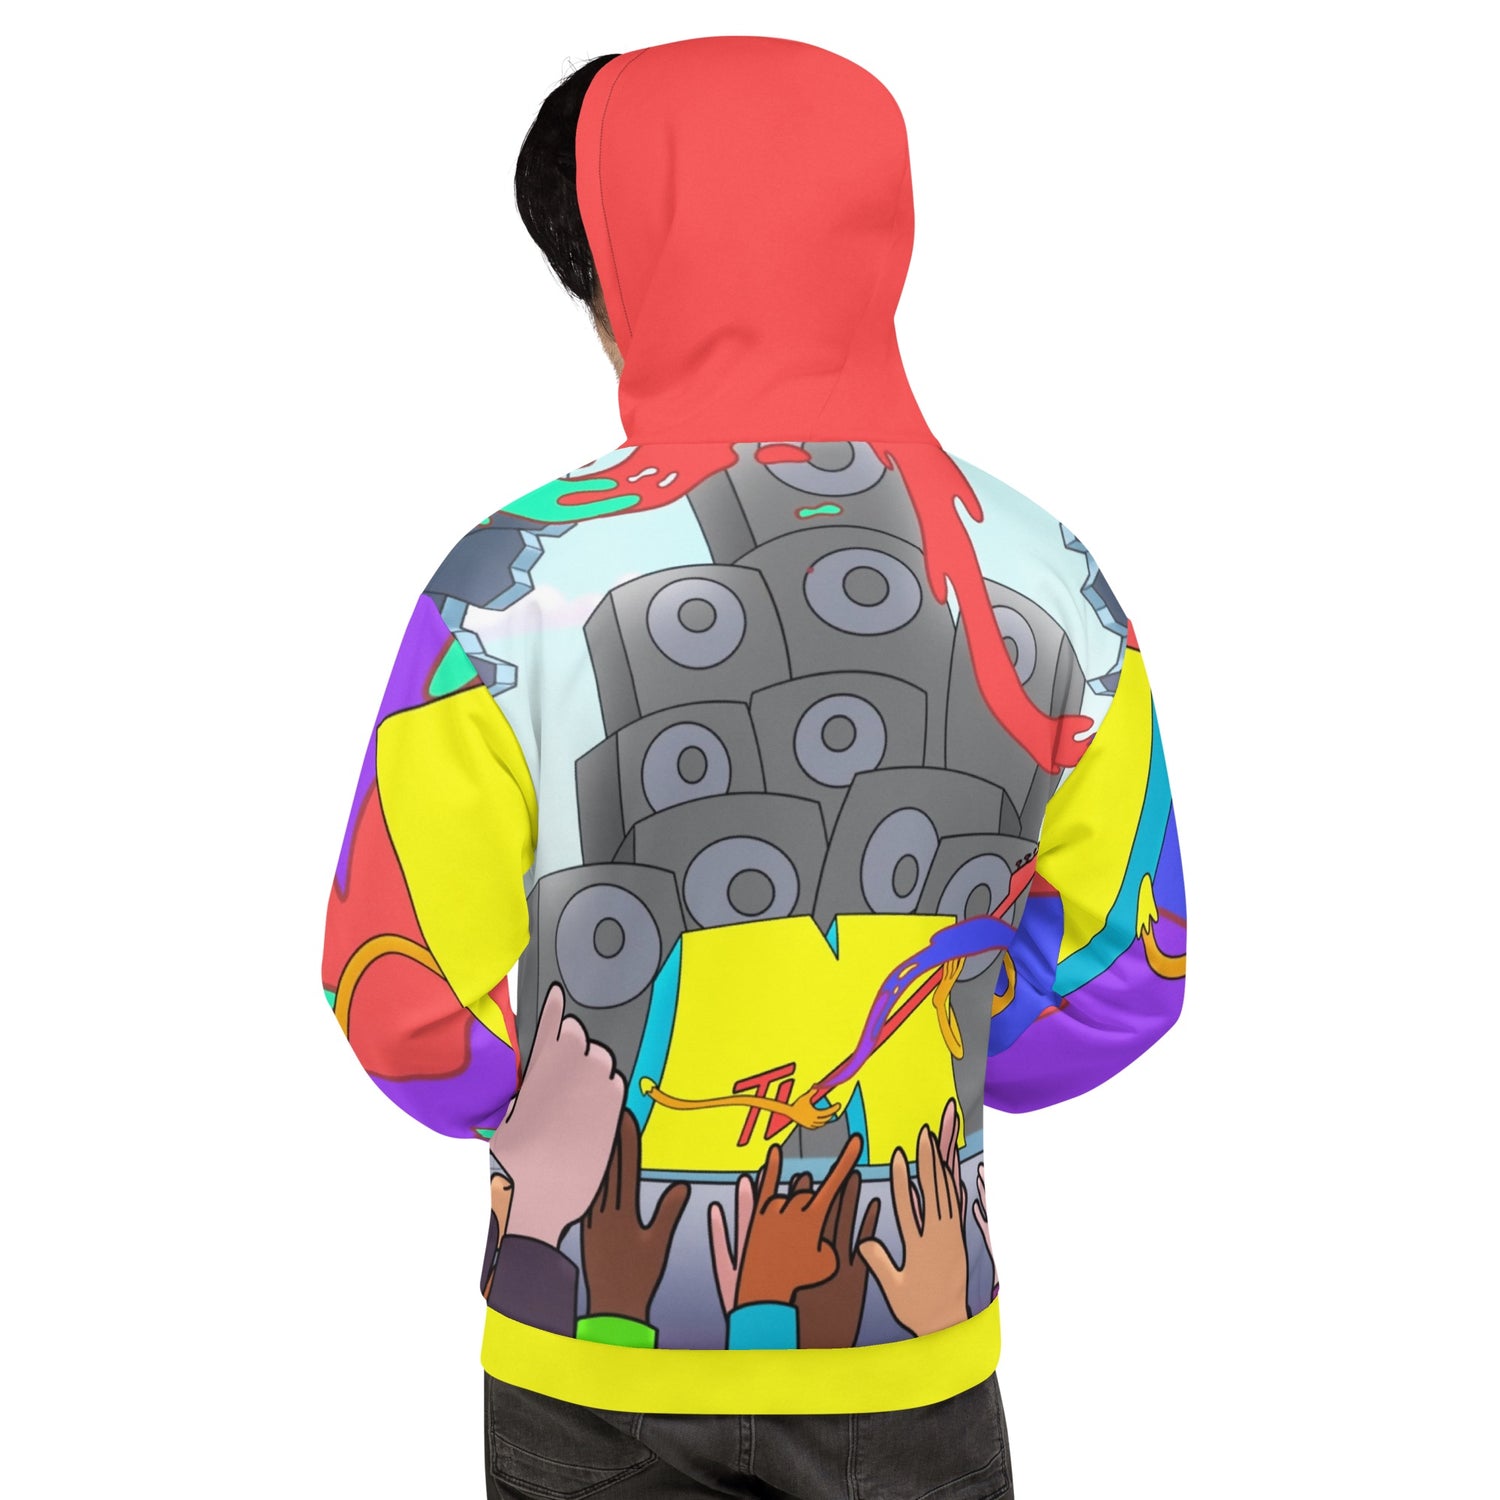 MTV HER Unisex Hooded Sweatshirt